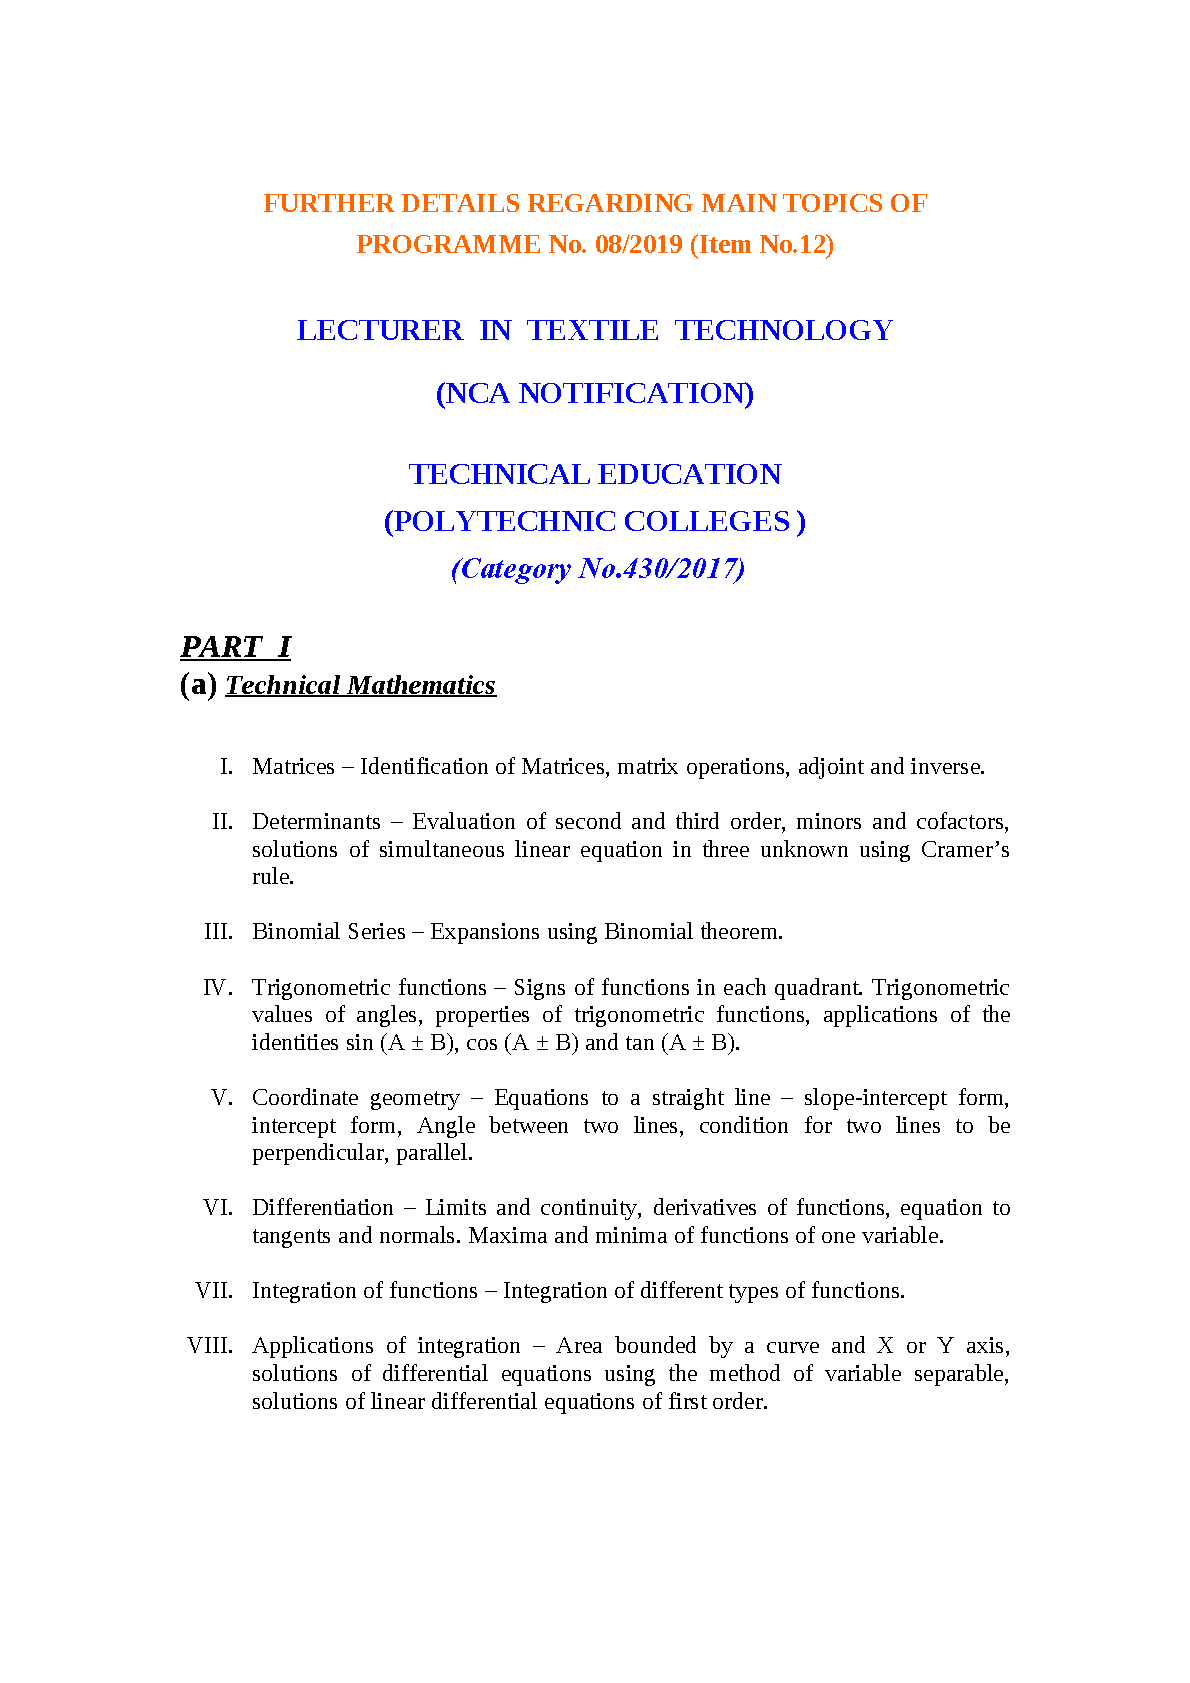 Kerala PSC Lecturer In Textile Technology Syllabus Aug 2019 - Notification Image 1